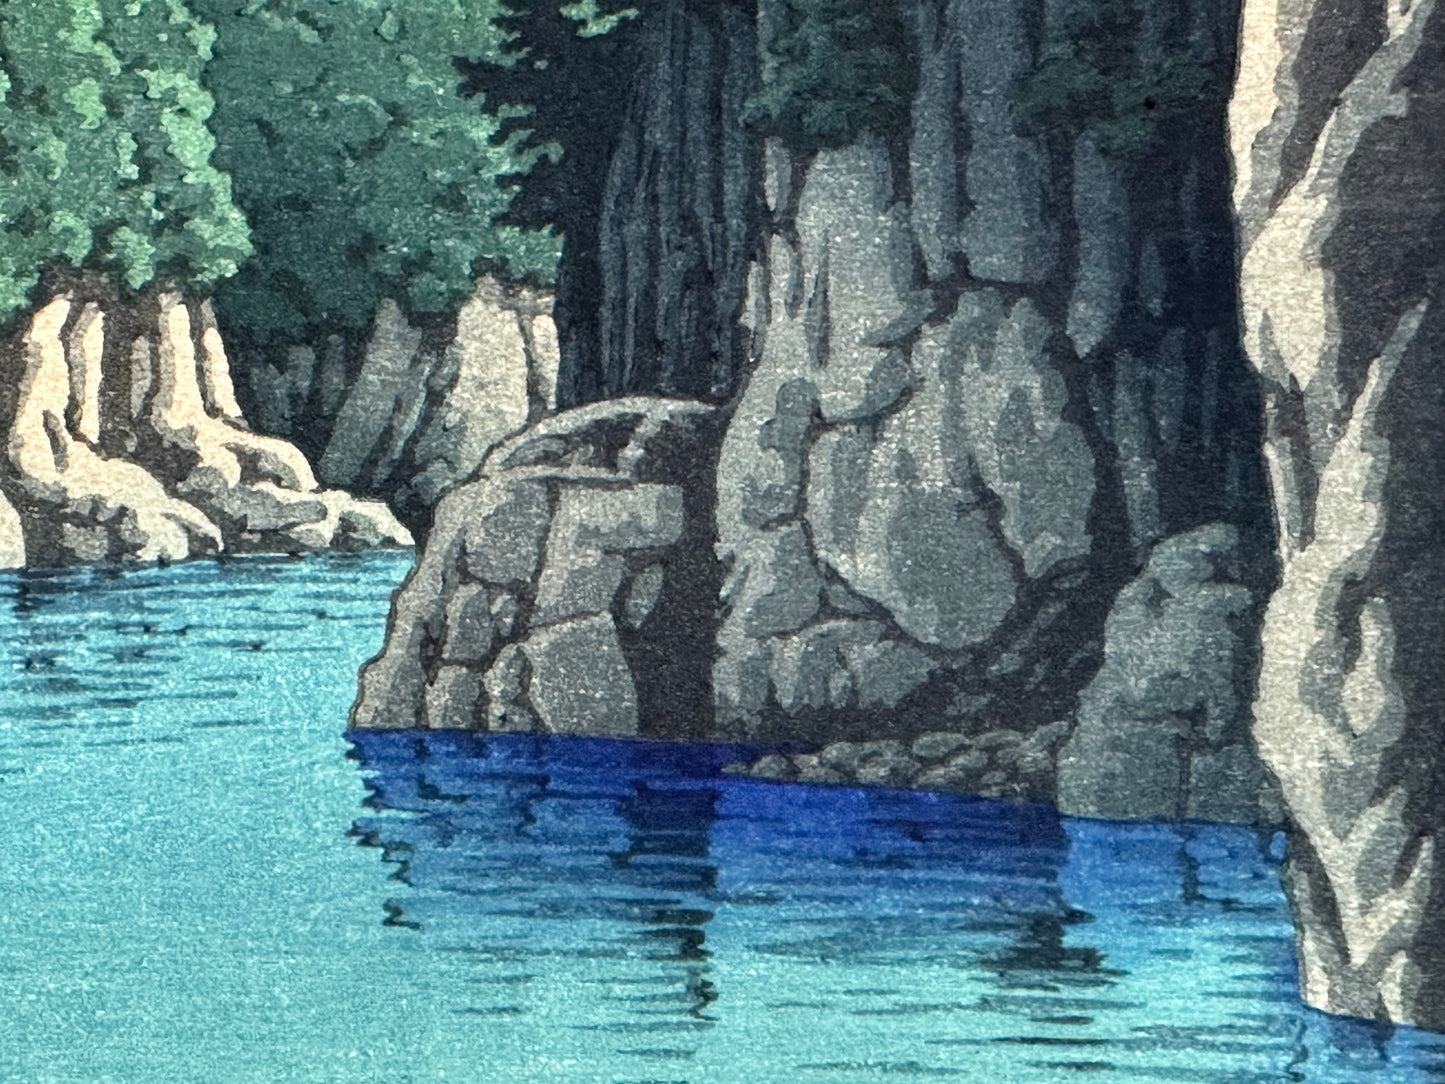 Kawase Hasui Giclee Woodblock Print "Calm at Kasaki" c1943 11"x17"